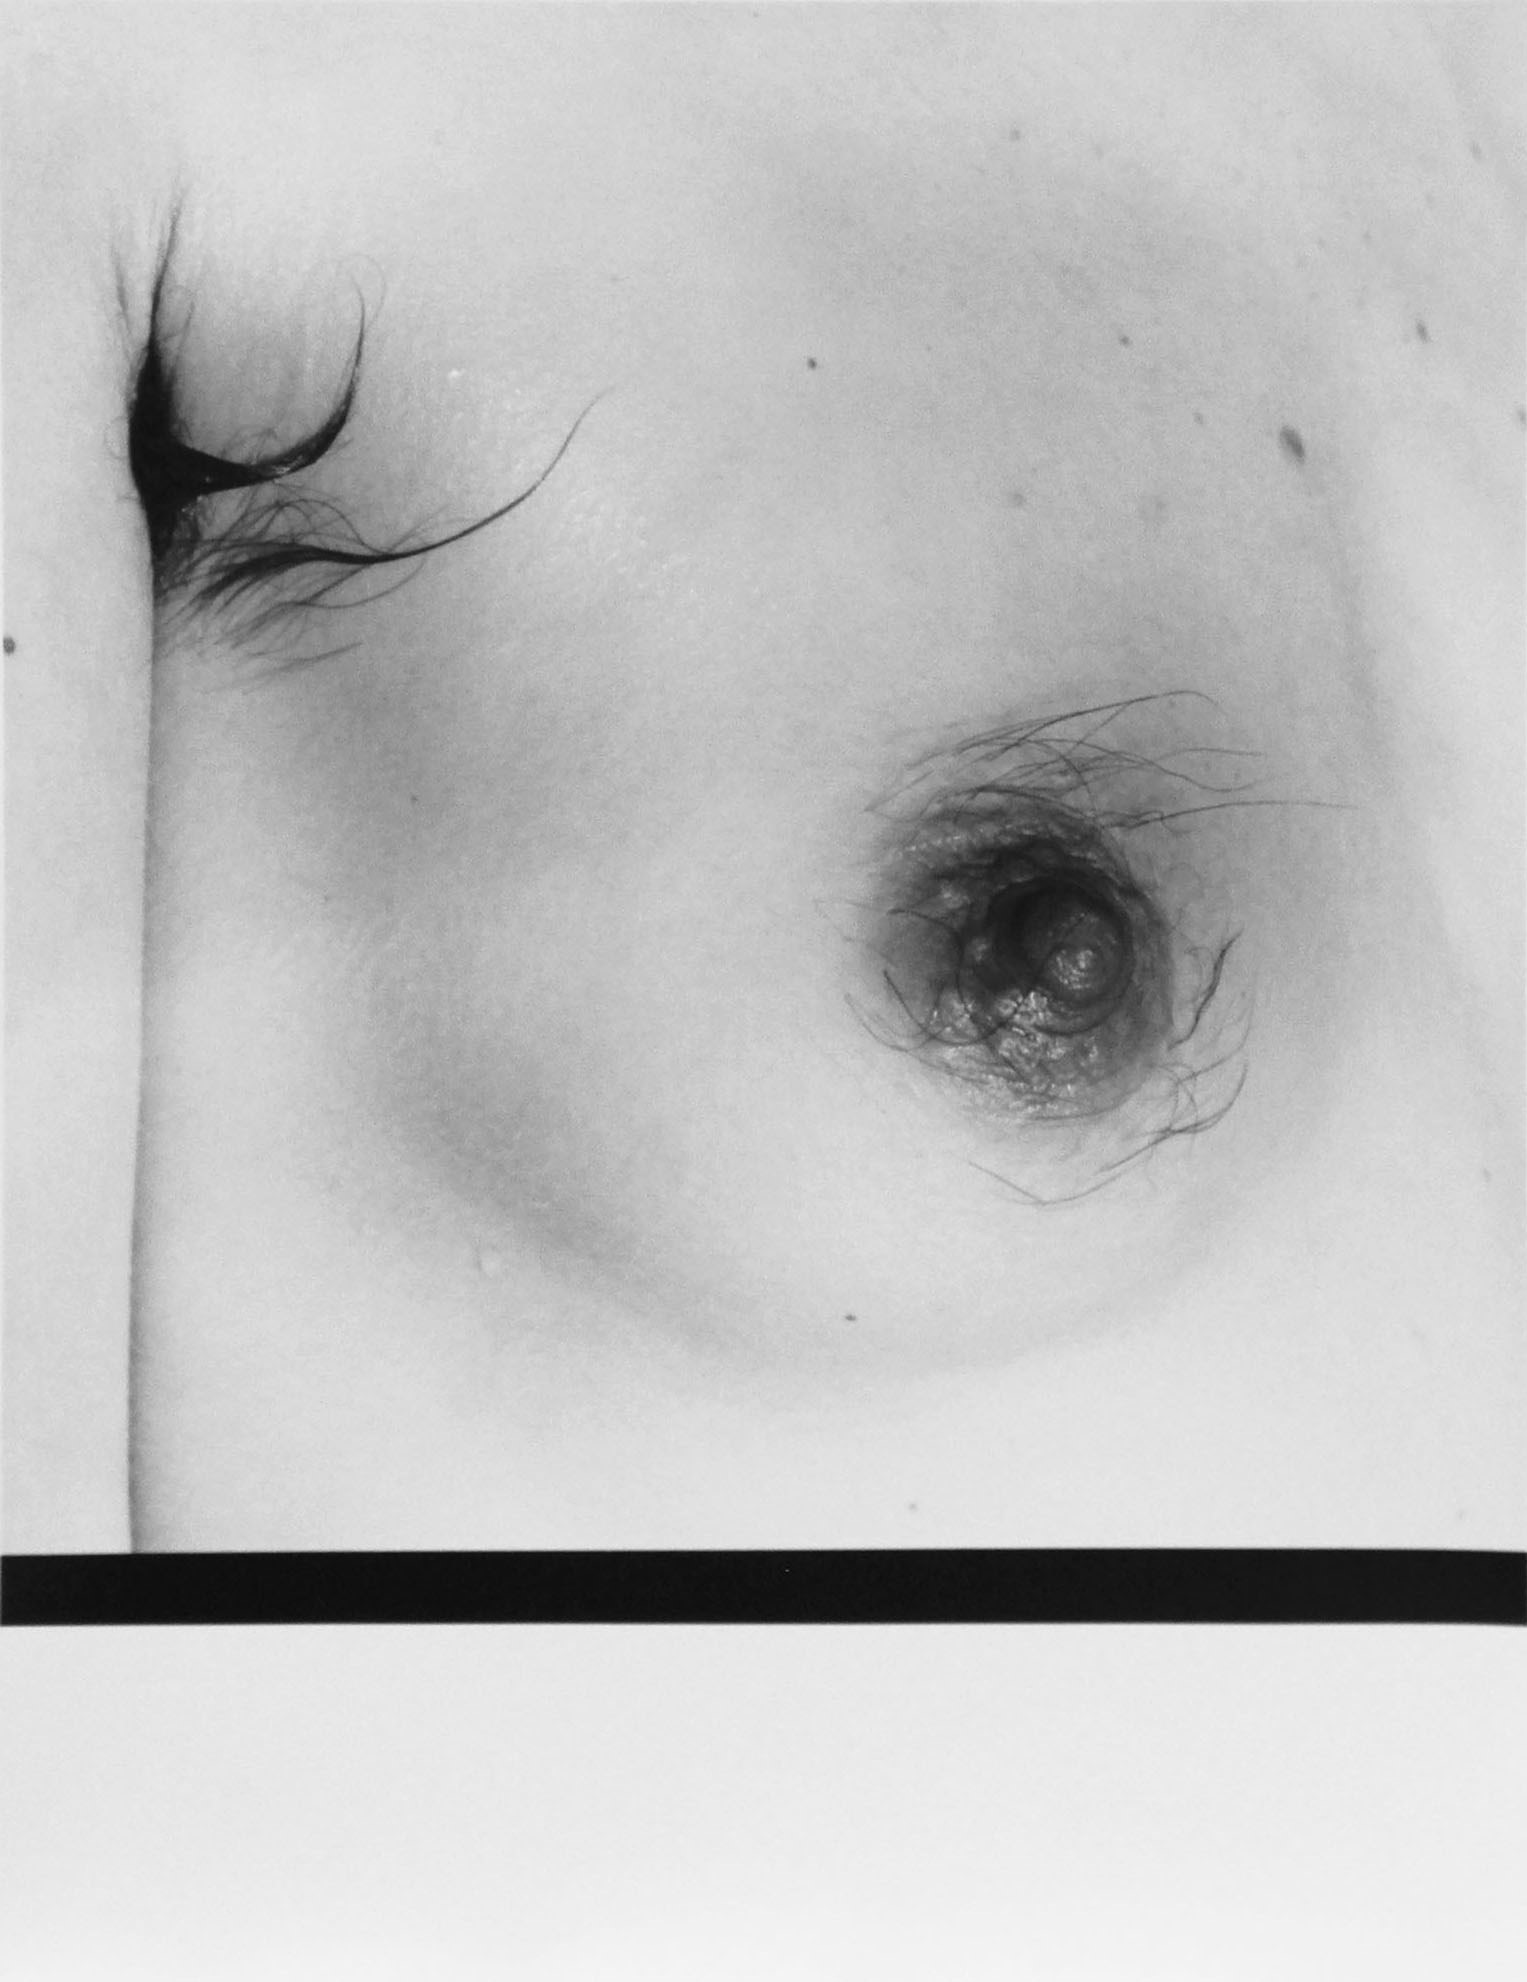 Moyra Davey, “Armpit” (1984), from The Shabbiness of Beauty by Moyra Davey & Peter Hujar (MACK, 2021)